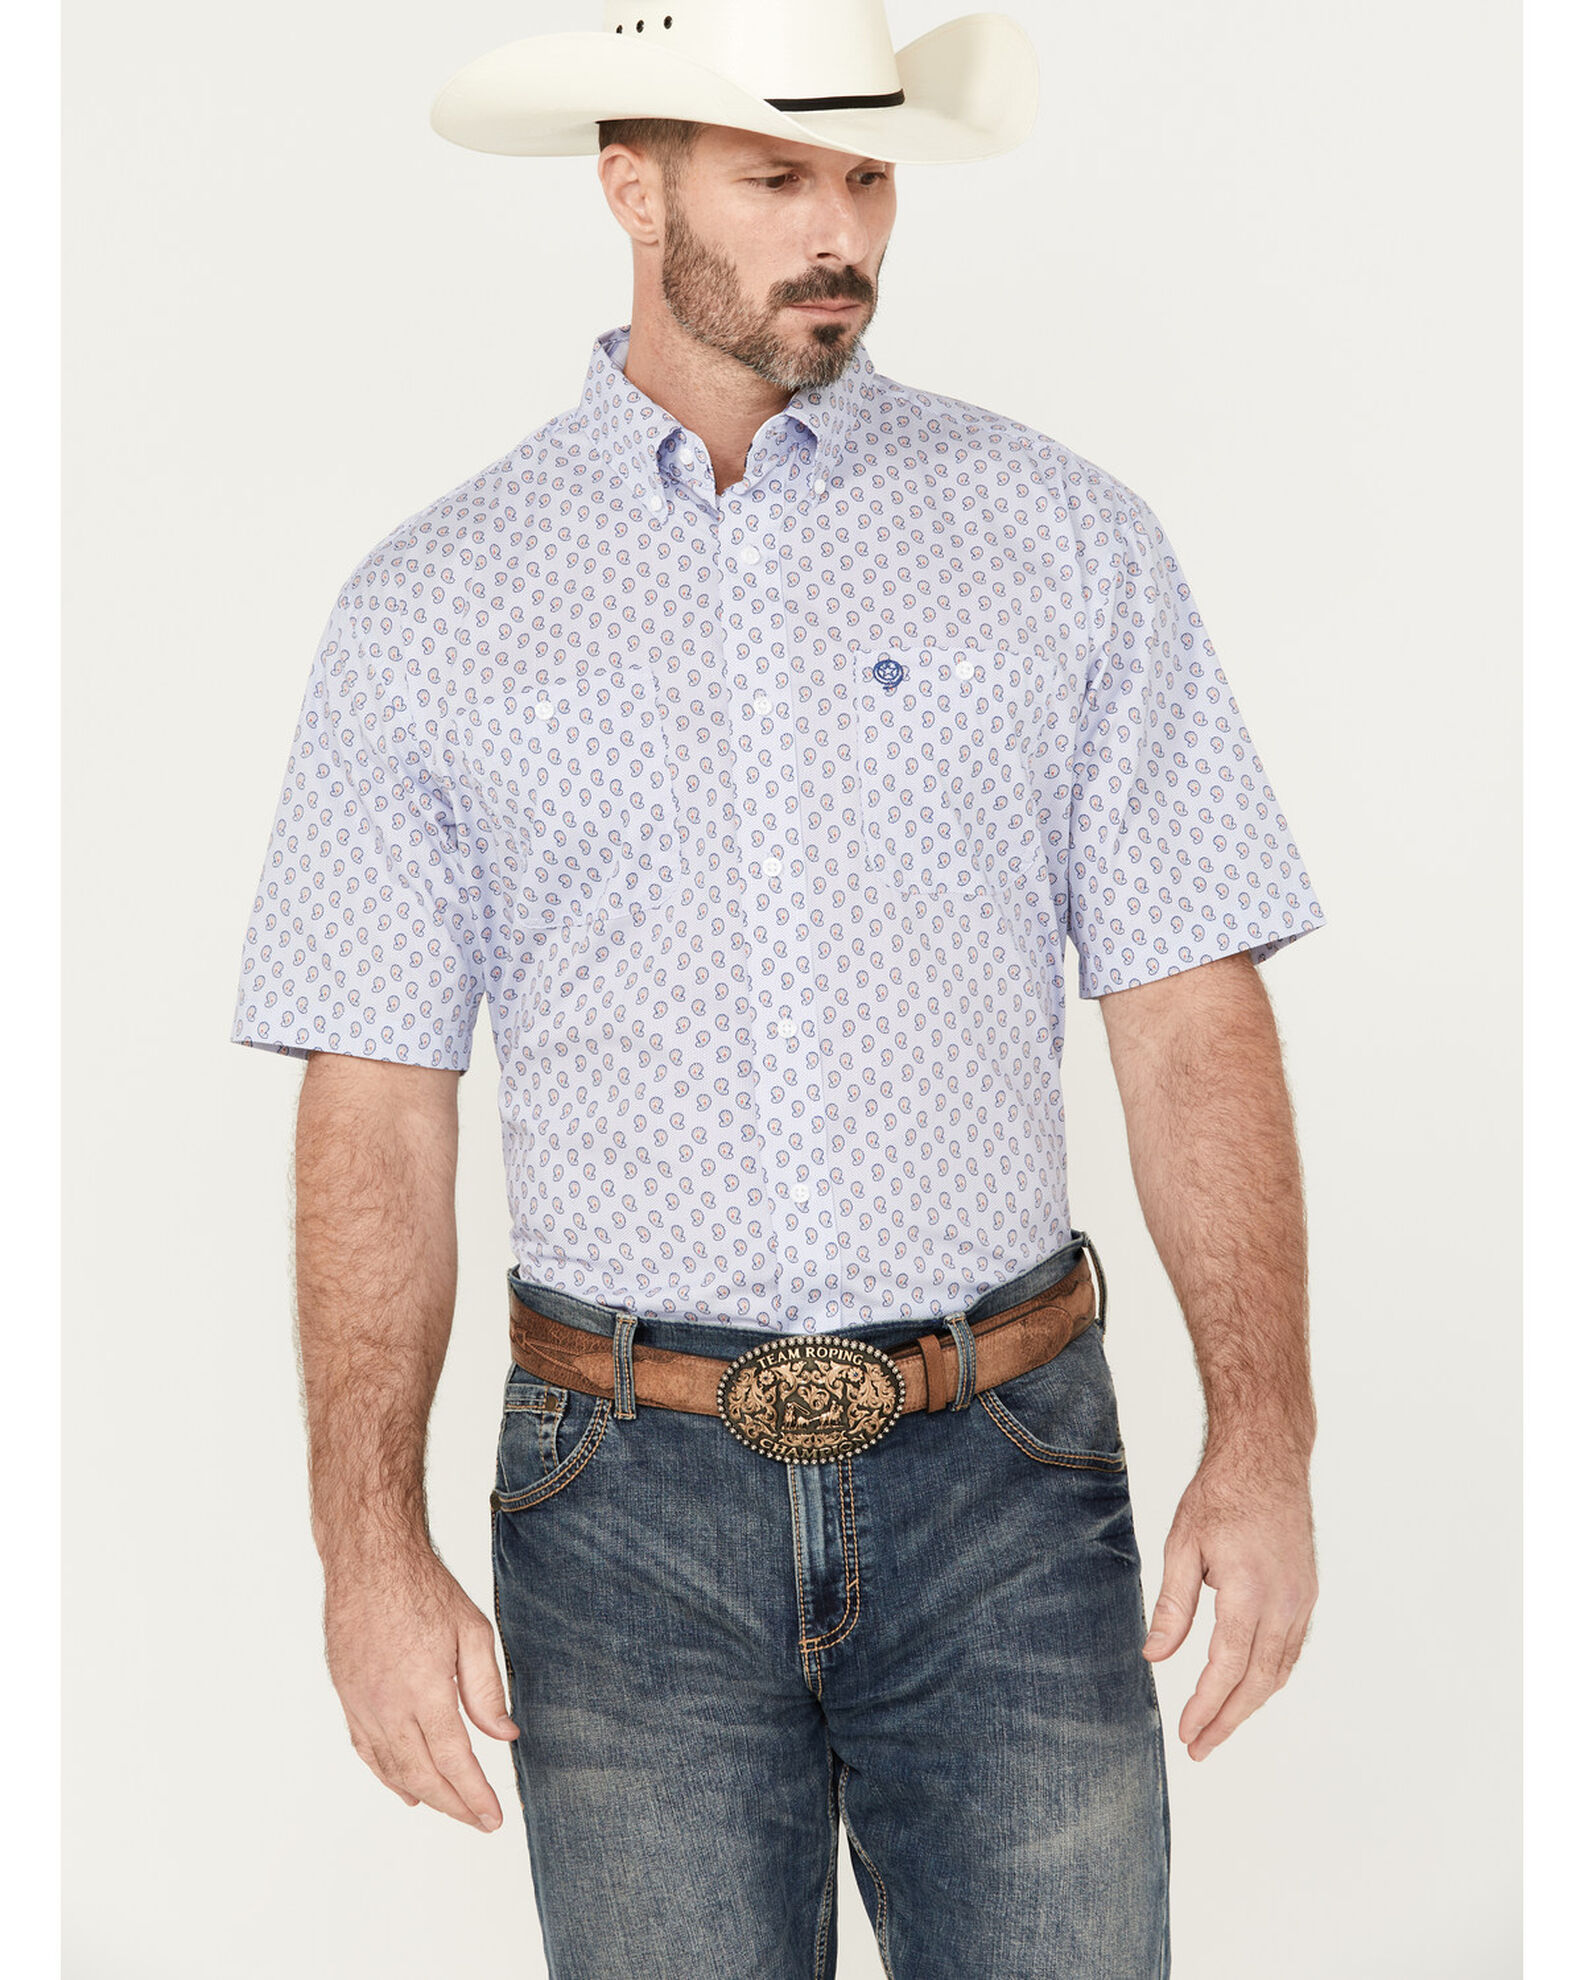 George Strait by Wrangler Men's Paisley Print Short Sleeve Button-Down Western Shirt